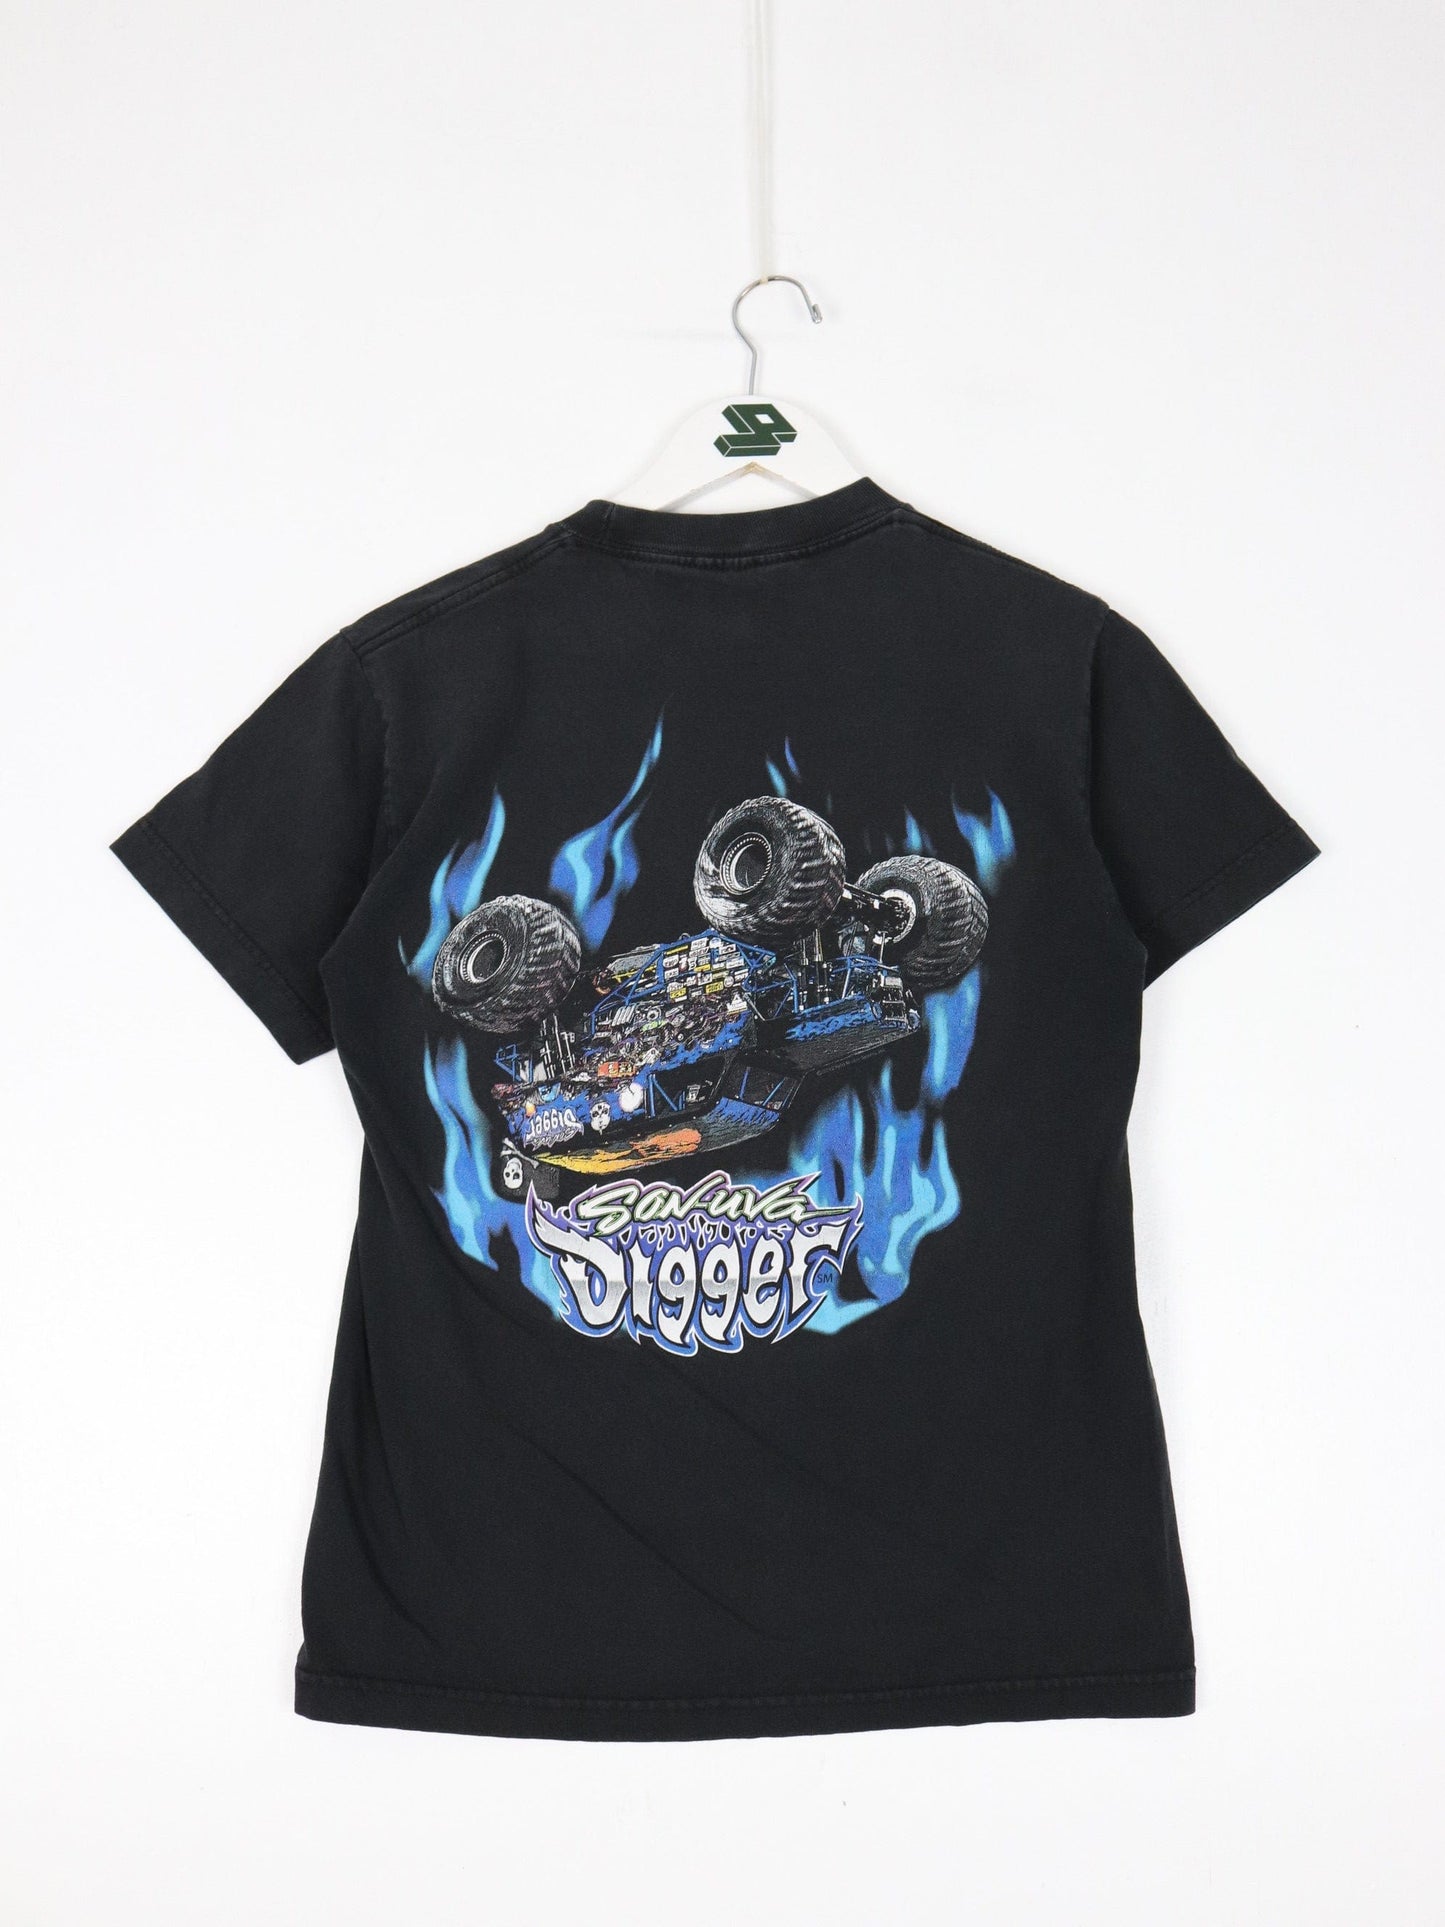 Other T-Shirts & Tank Tops Monster Truck T Shirt Youth Medium Black Son-Uva-Digger Promo